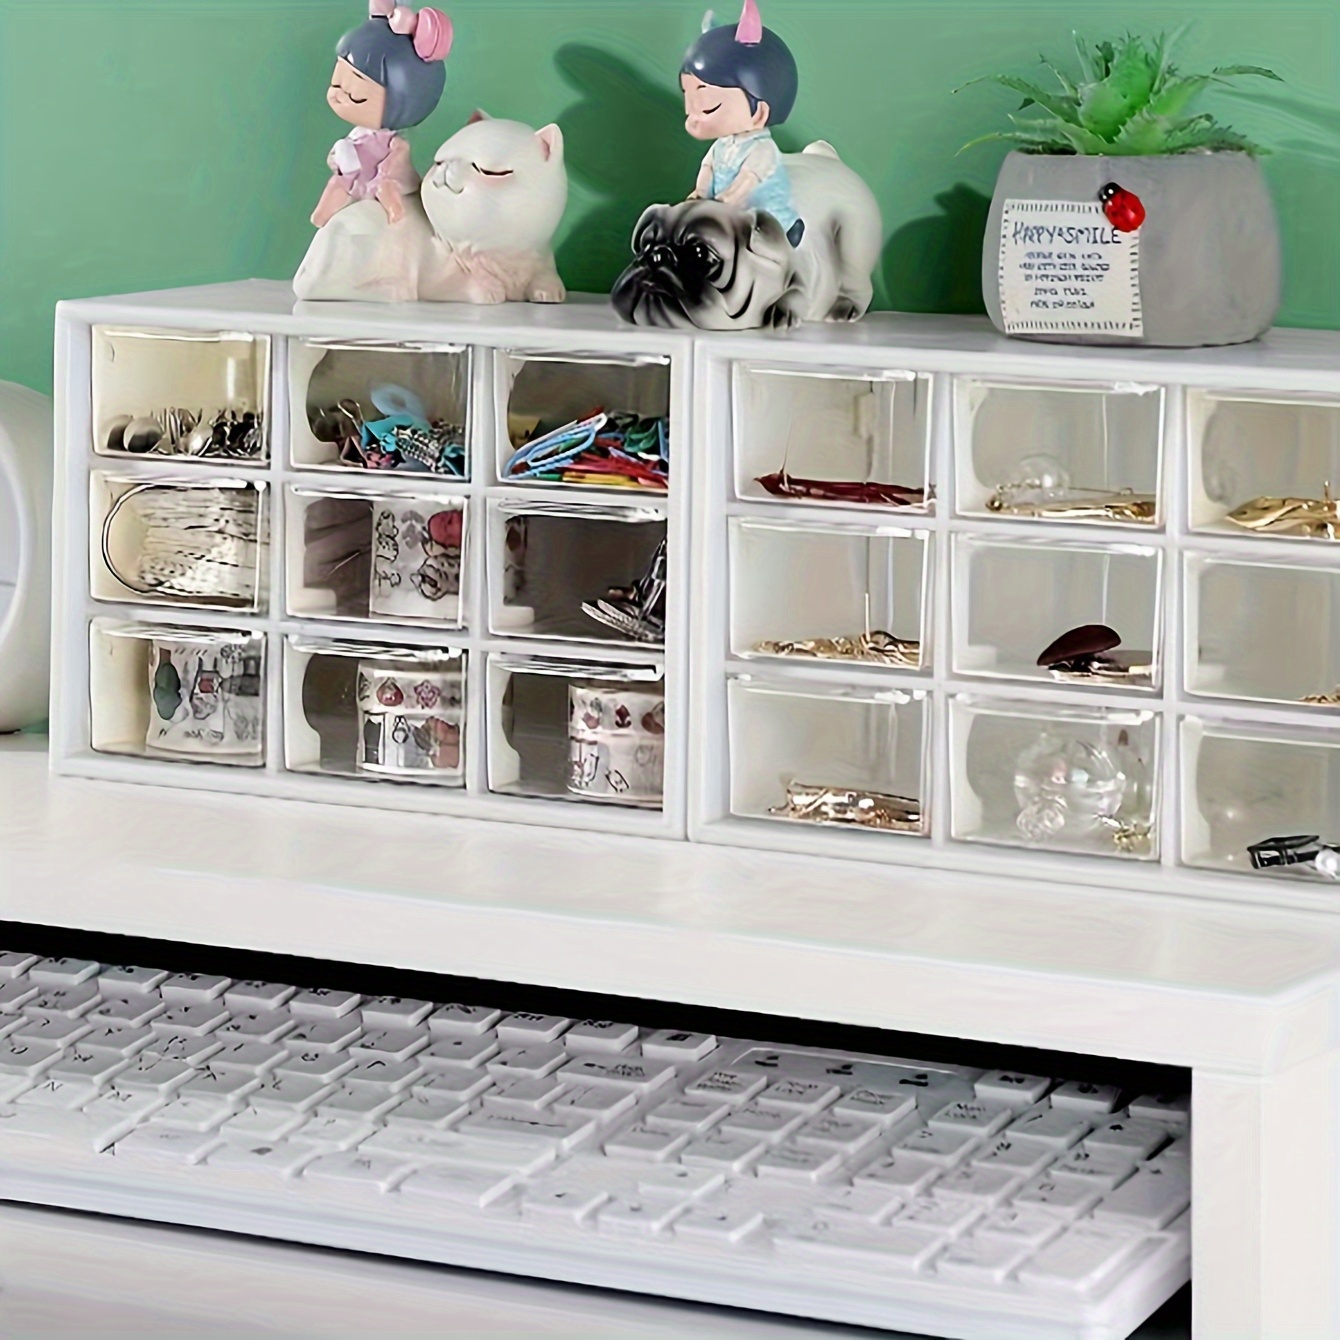 Mehikdip 13X15X4 Desk Organizer with Drawers in Wood-Modern Farmhouse Mini Storage Organizer Latitude Run